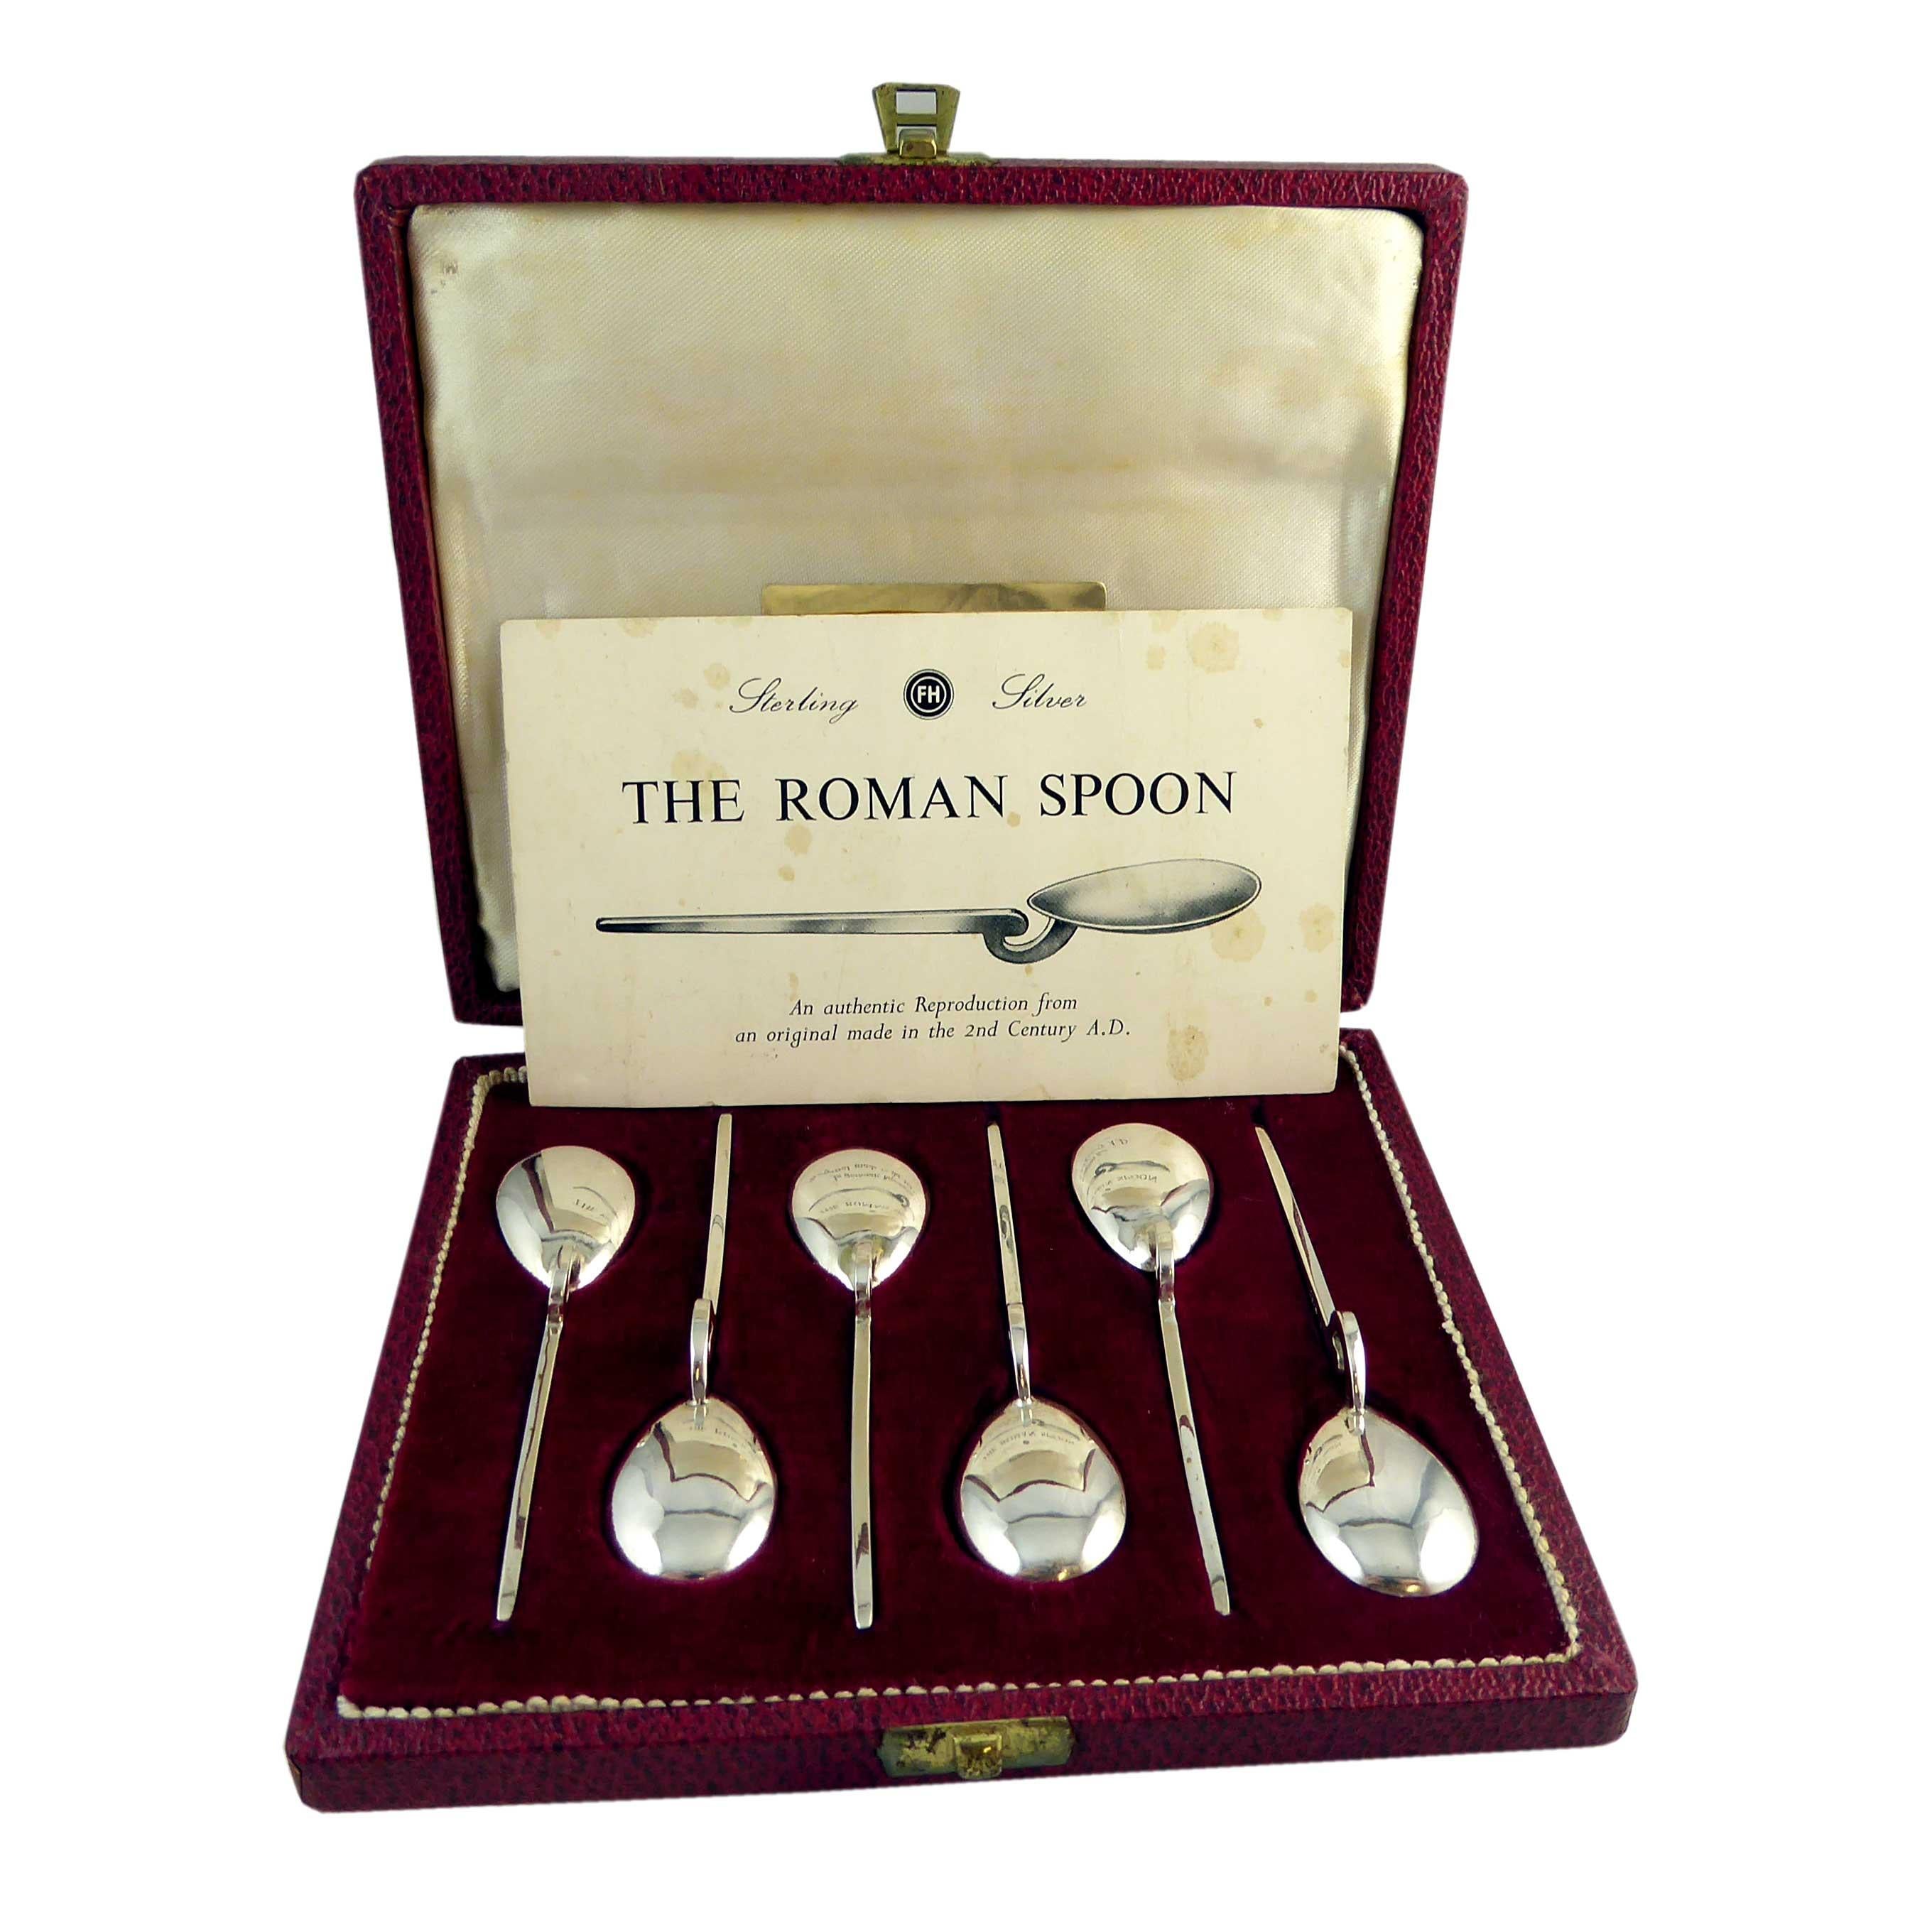 Vintage 1970s Silver "Roman Spoon" Teaspoons, Boxed, Hallmarked Sheffiled, 1973